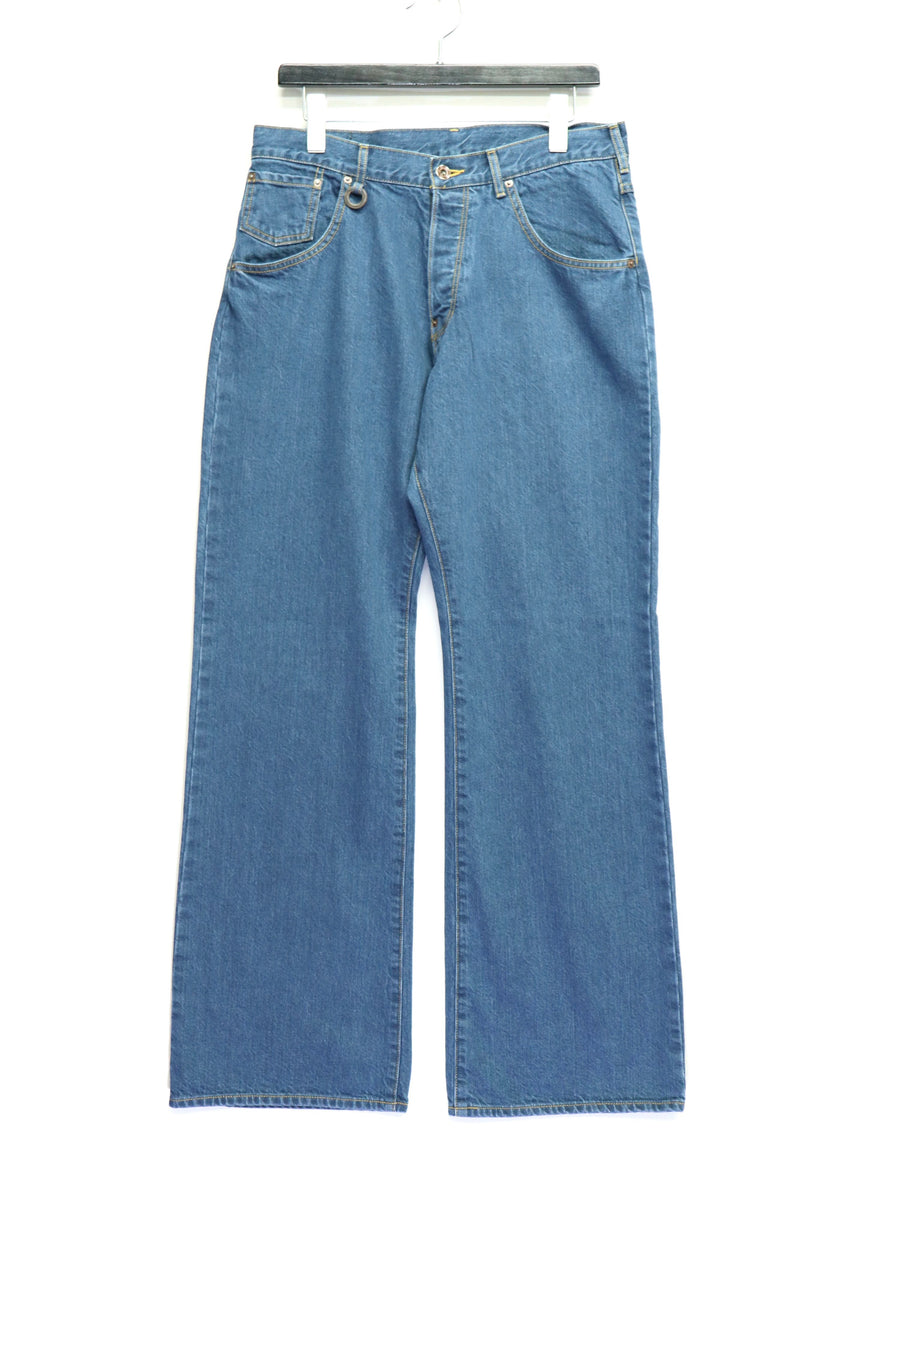 inhzoy Kids Girls High Waist Distressed Flared Jeans Bell Bottom Denim  Trousers Blue 8 